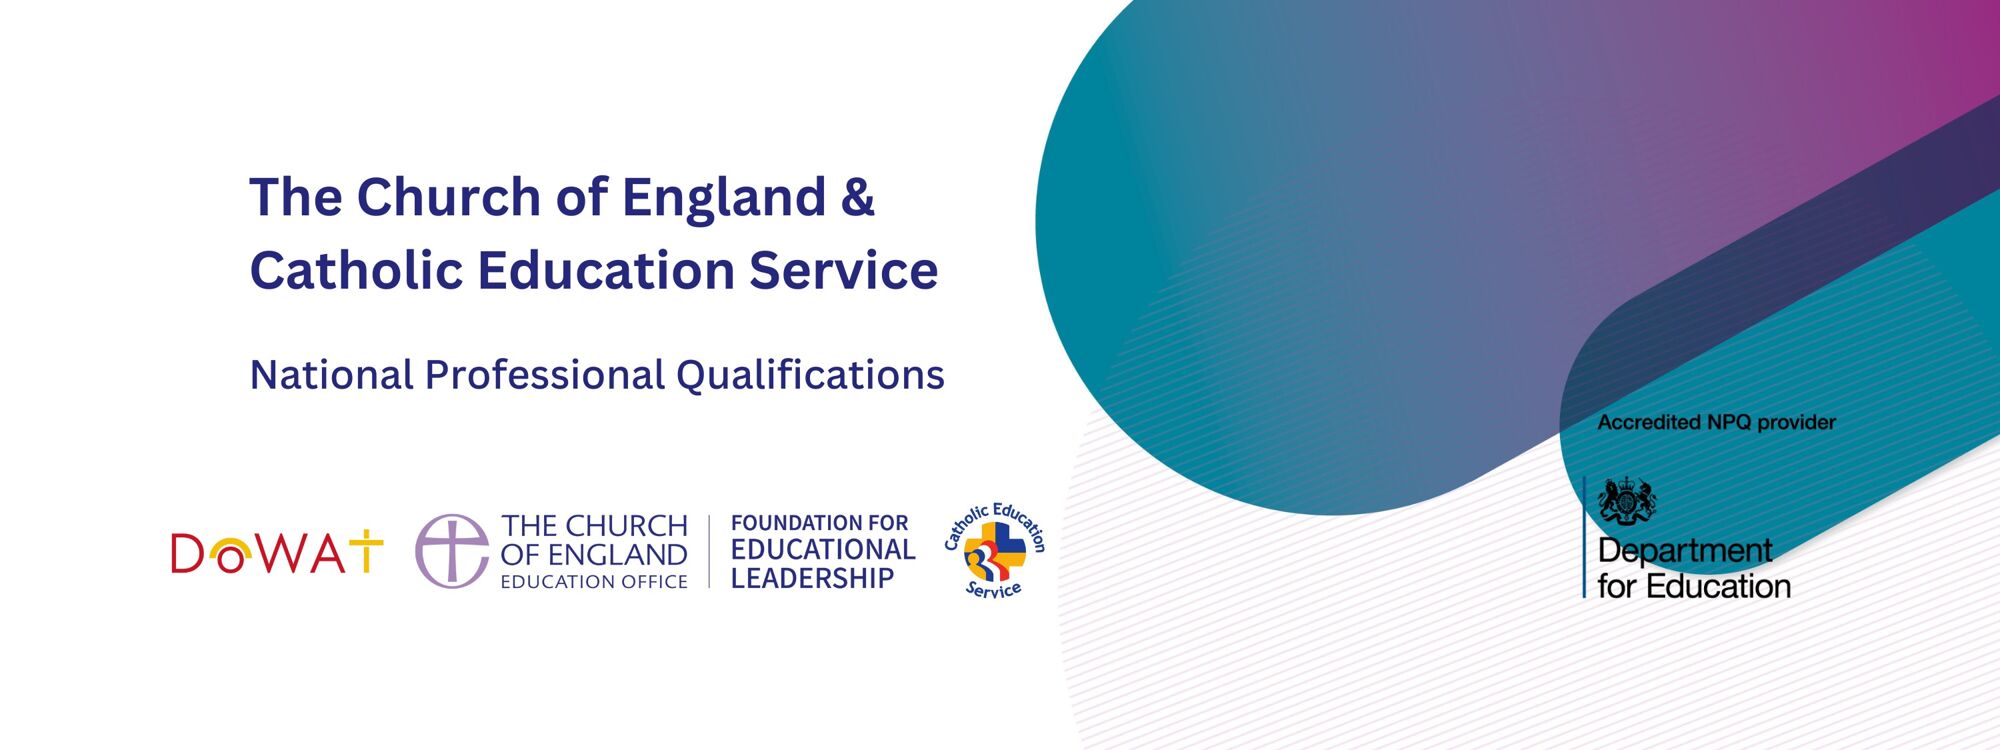 The Church of England & Catholic Education Service (4)